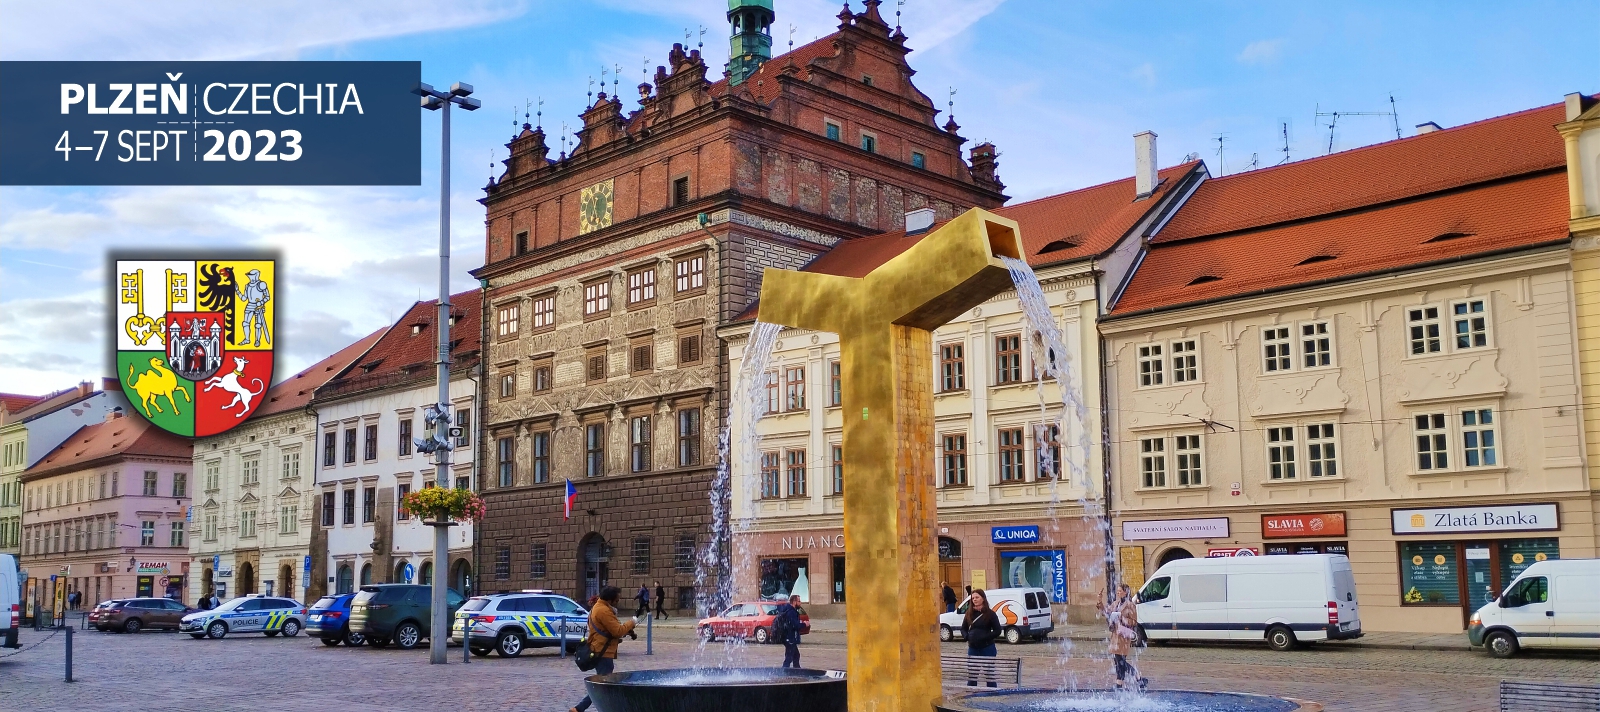 Plzeň: The renaissance city hall from 1559